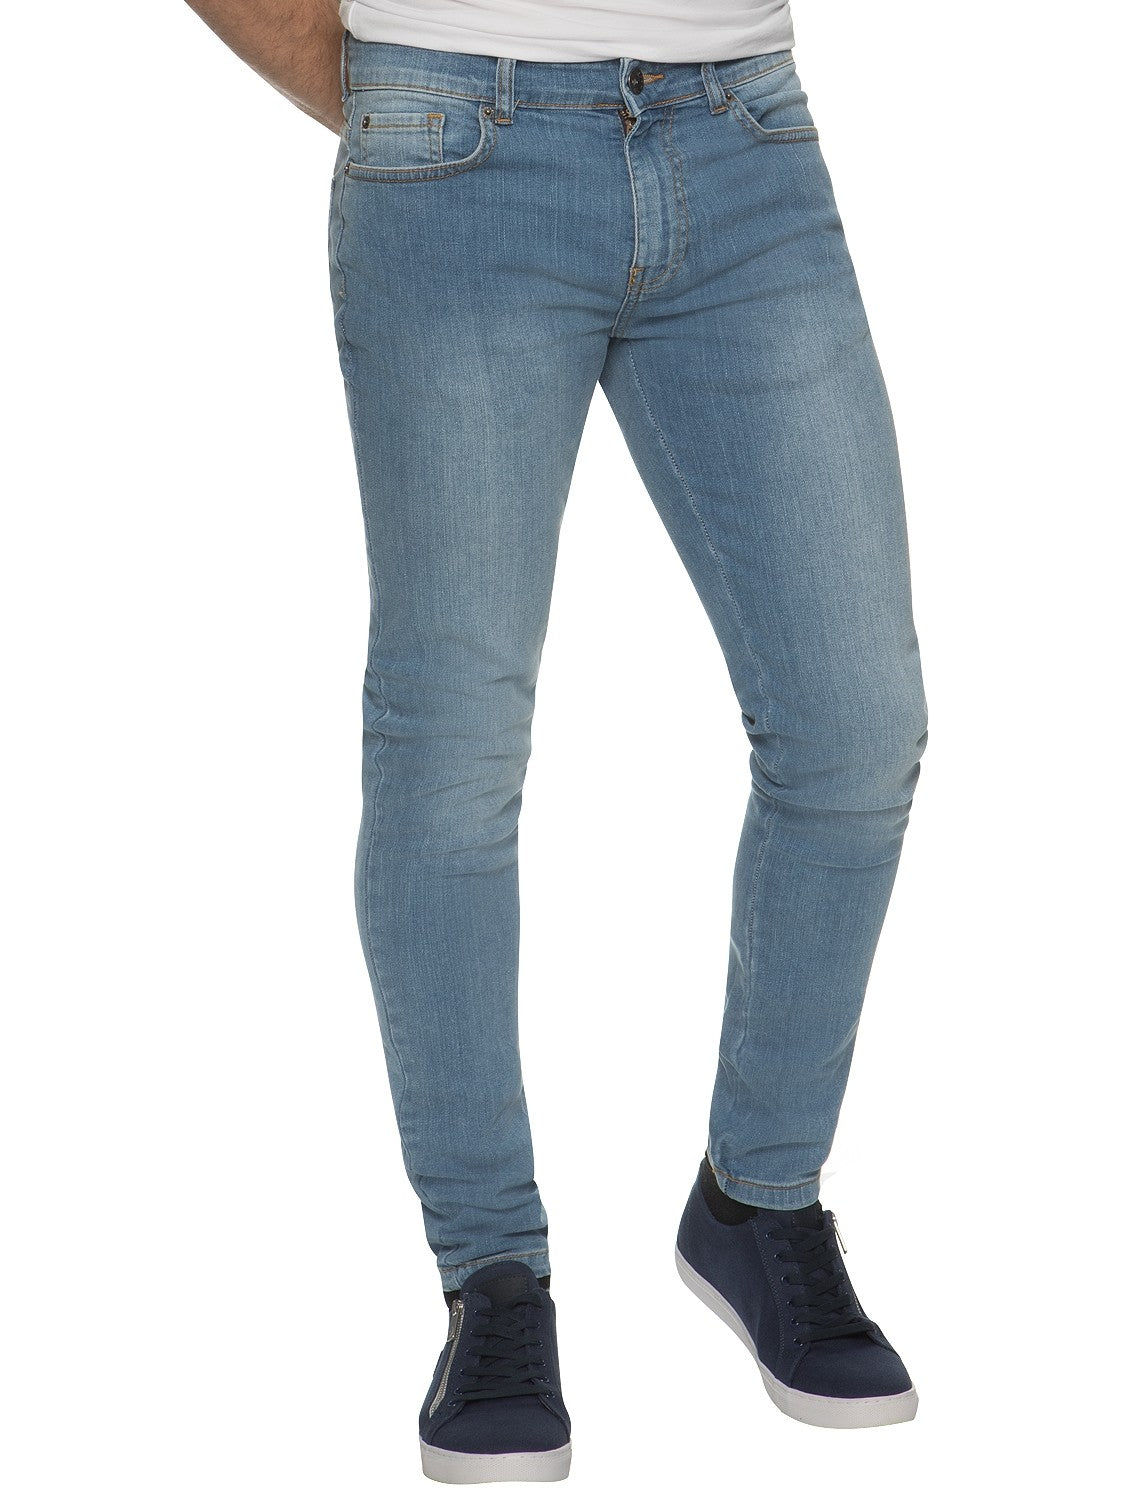 Mens Super Skinny Slim Fit Stretch Light Stonewash Jeans by Enzo Jeans - Spirit Clothing